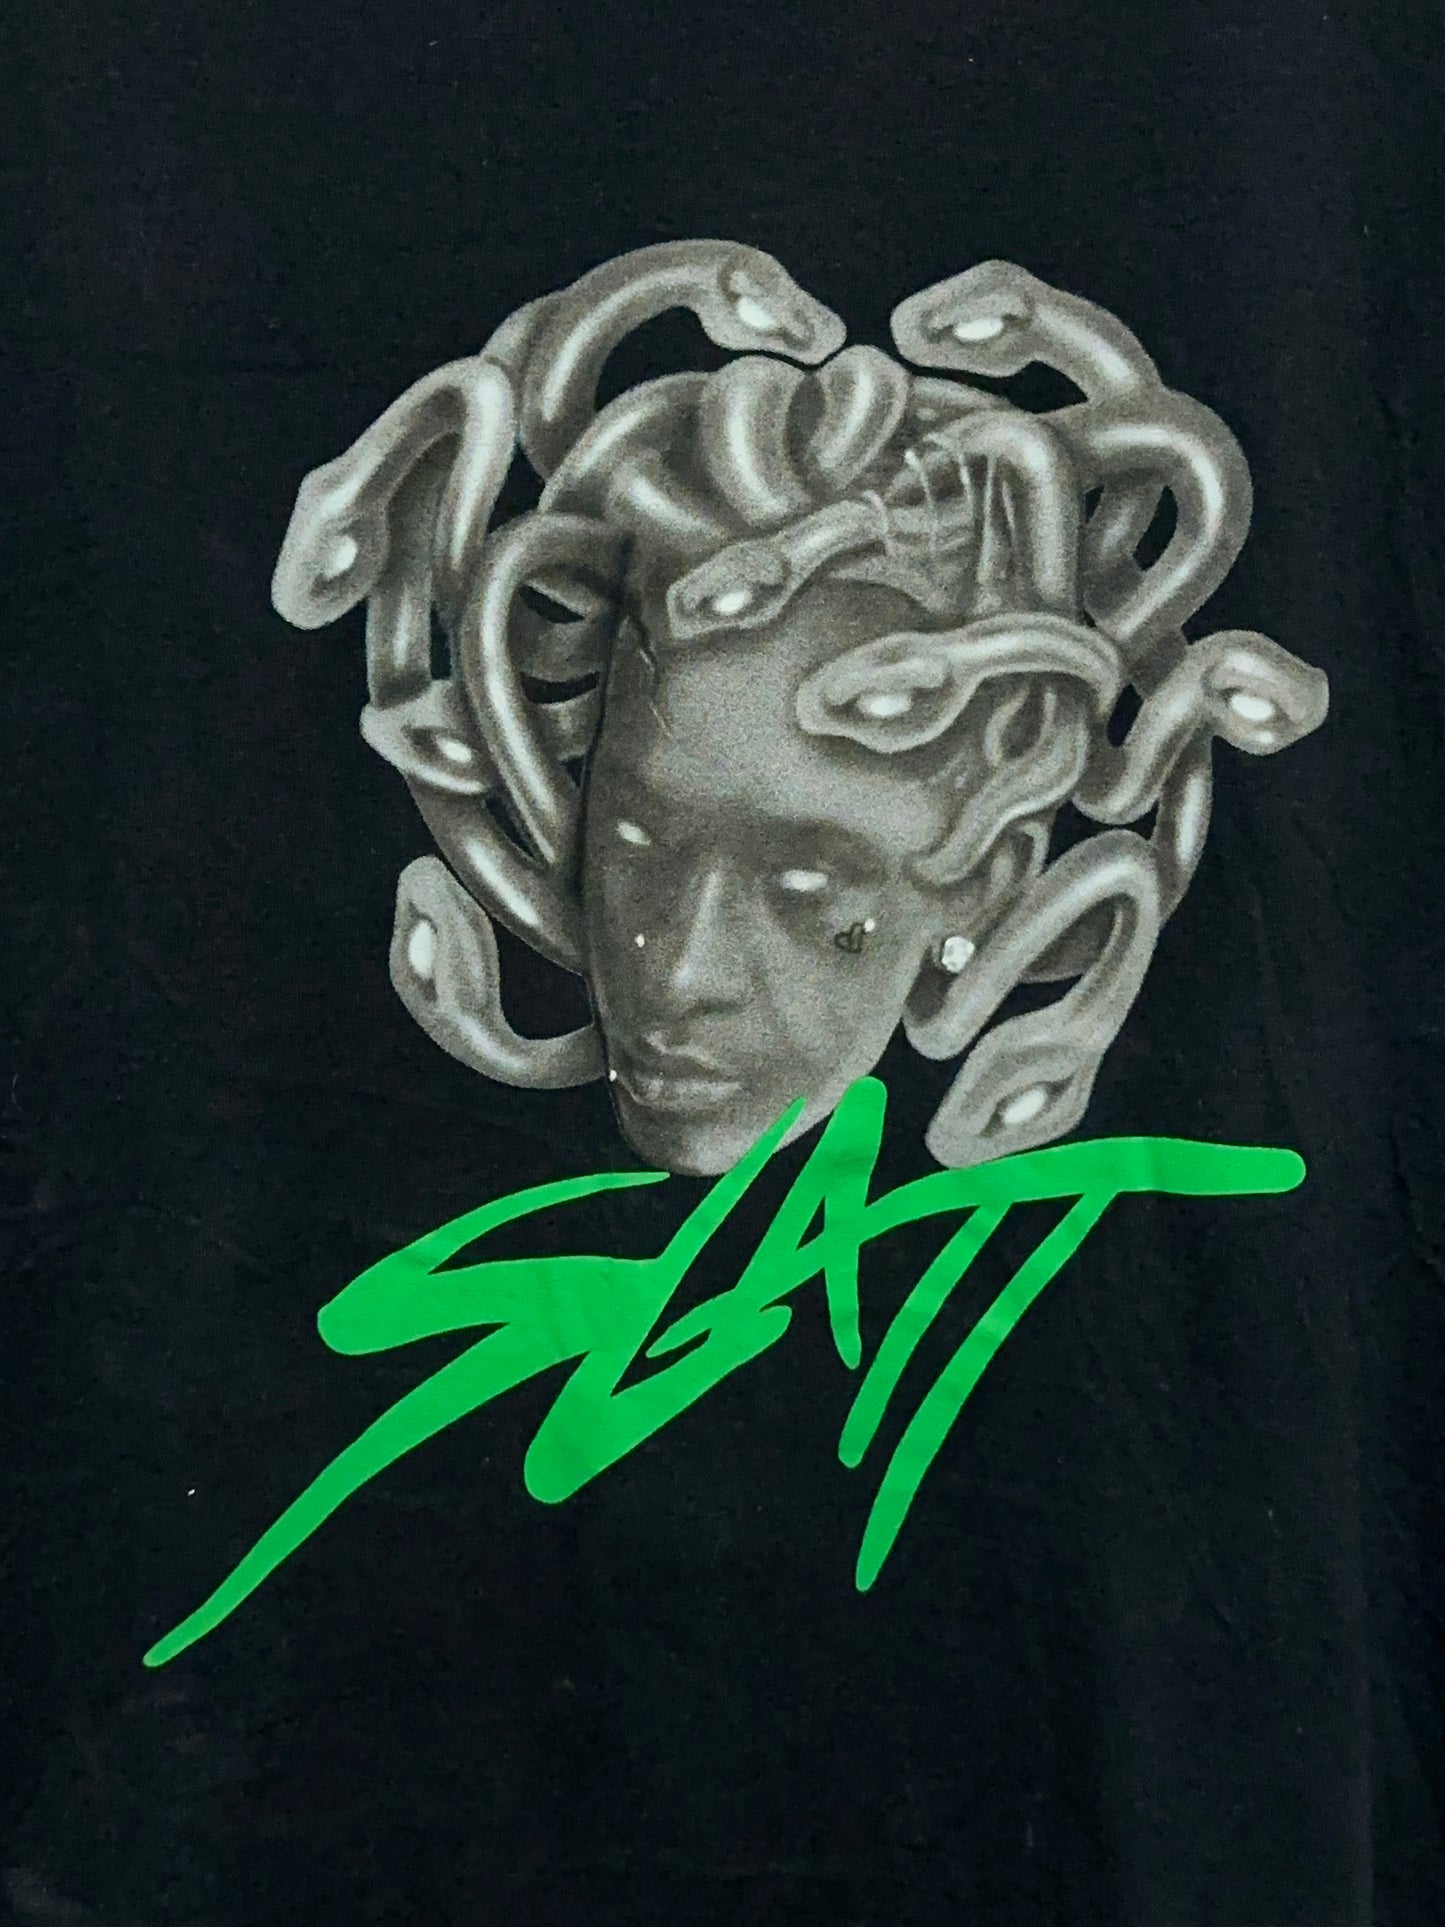 Young Thug Slatt Tour Official Merch Medusa Head Graphic Tee Large